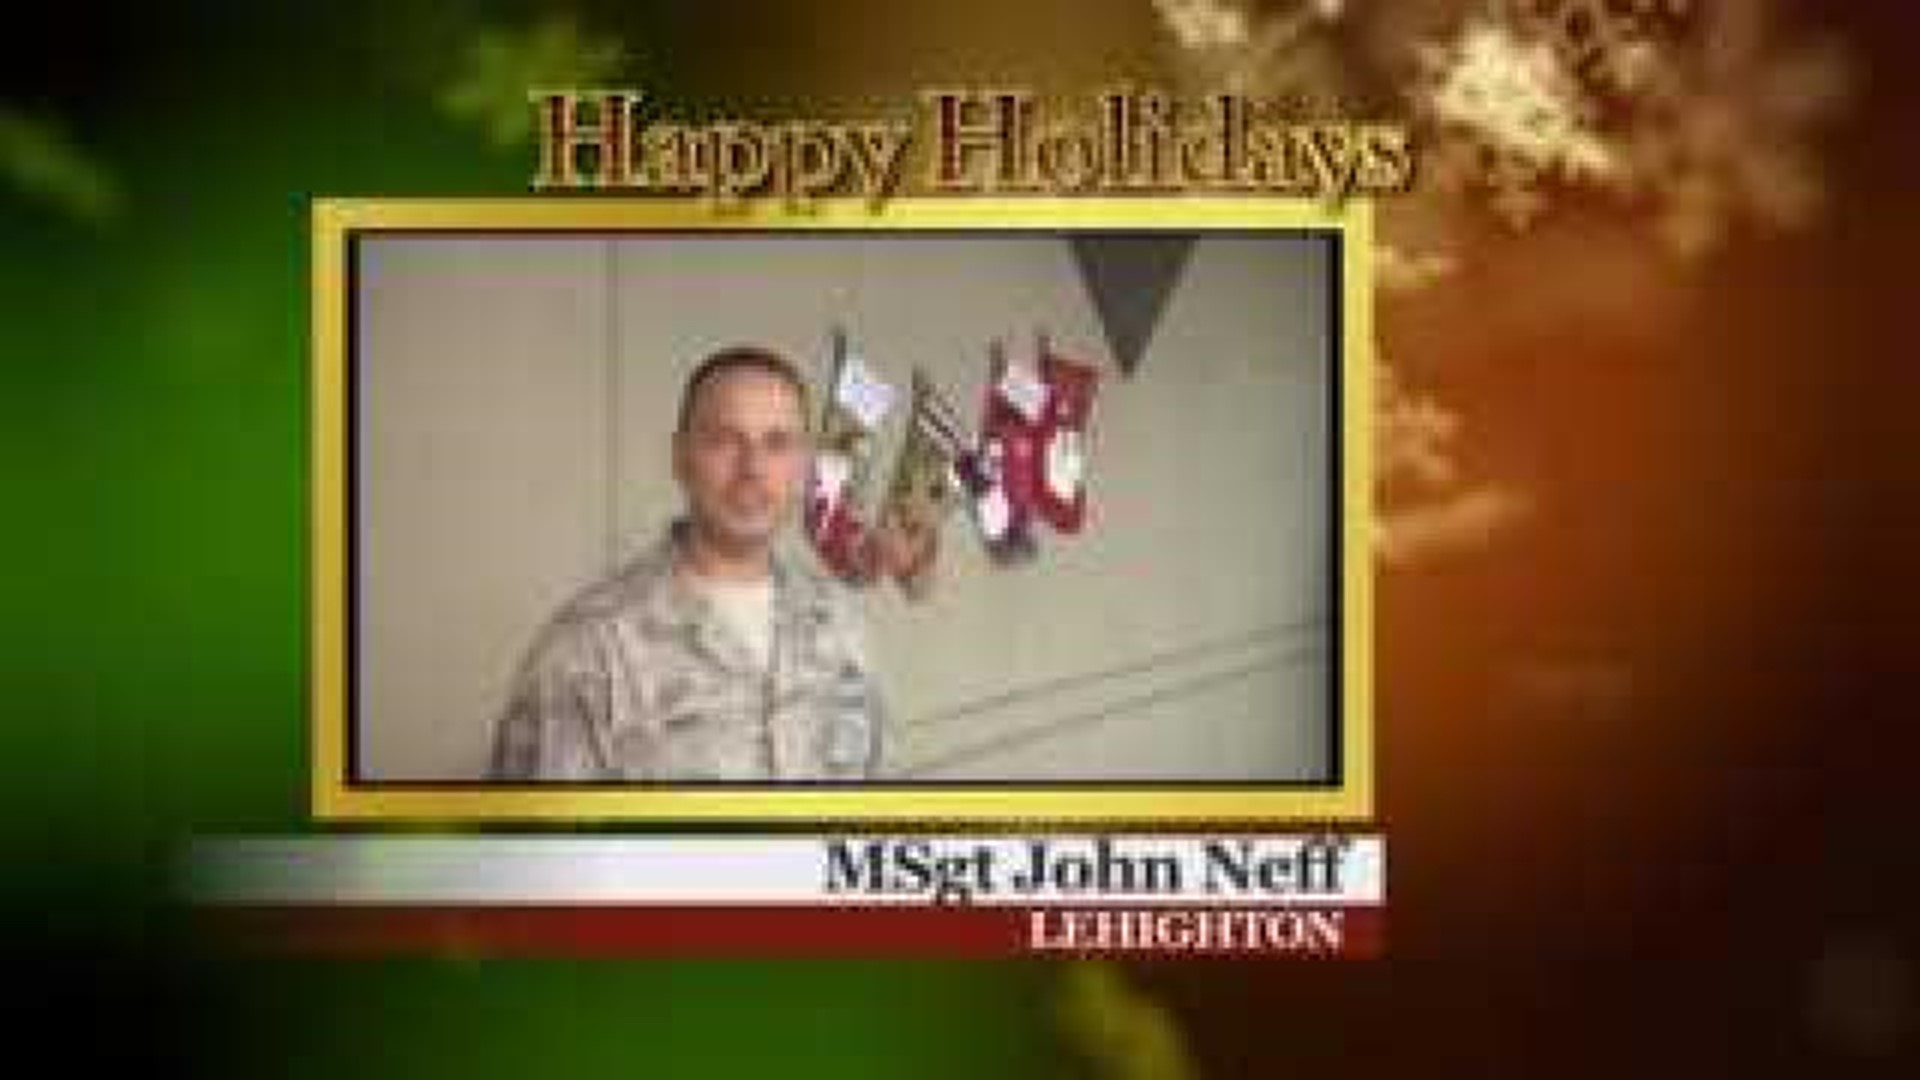 Military Greeting: MSgt John Neff